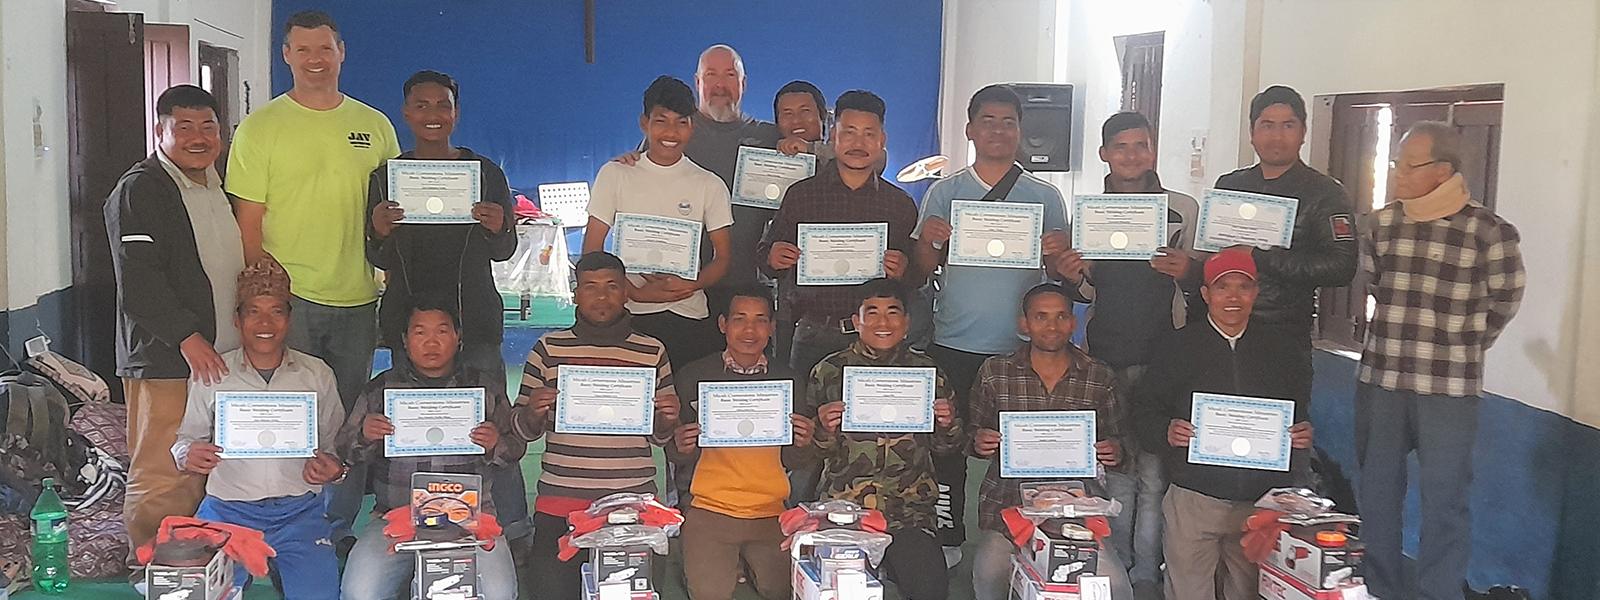 Welding class graduates in Nepal display their certificates. (Photo: Micah Cornerstone Ministries)